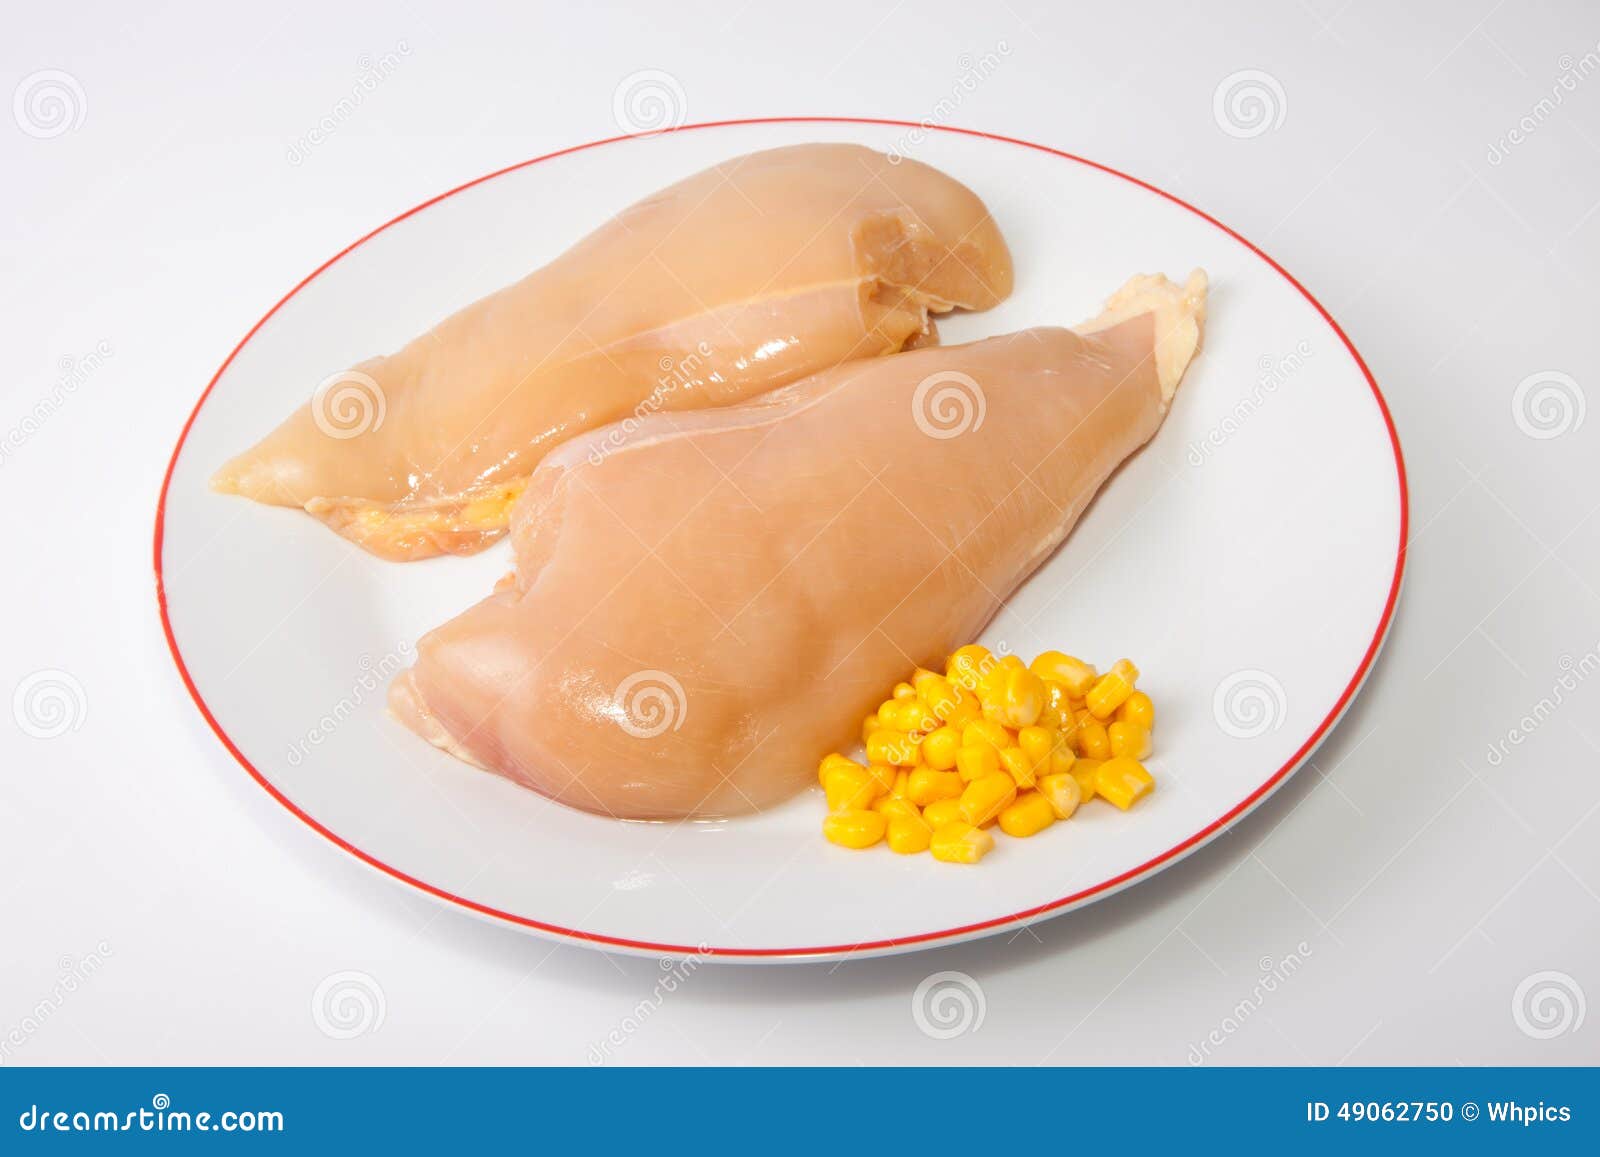 Почему курица желтая. Грудка куриная желтого цвета. Жёлтый цвет у филе курицы. У куриной грудки желтый цвет.